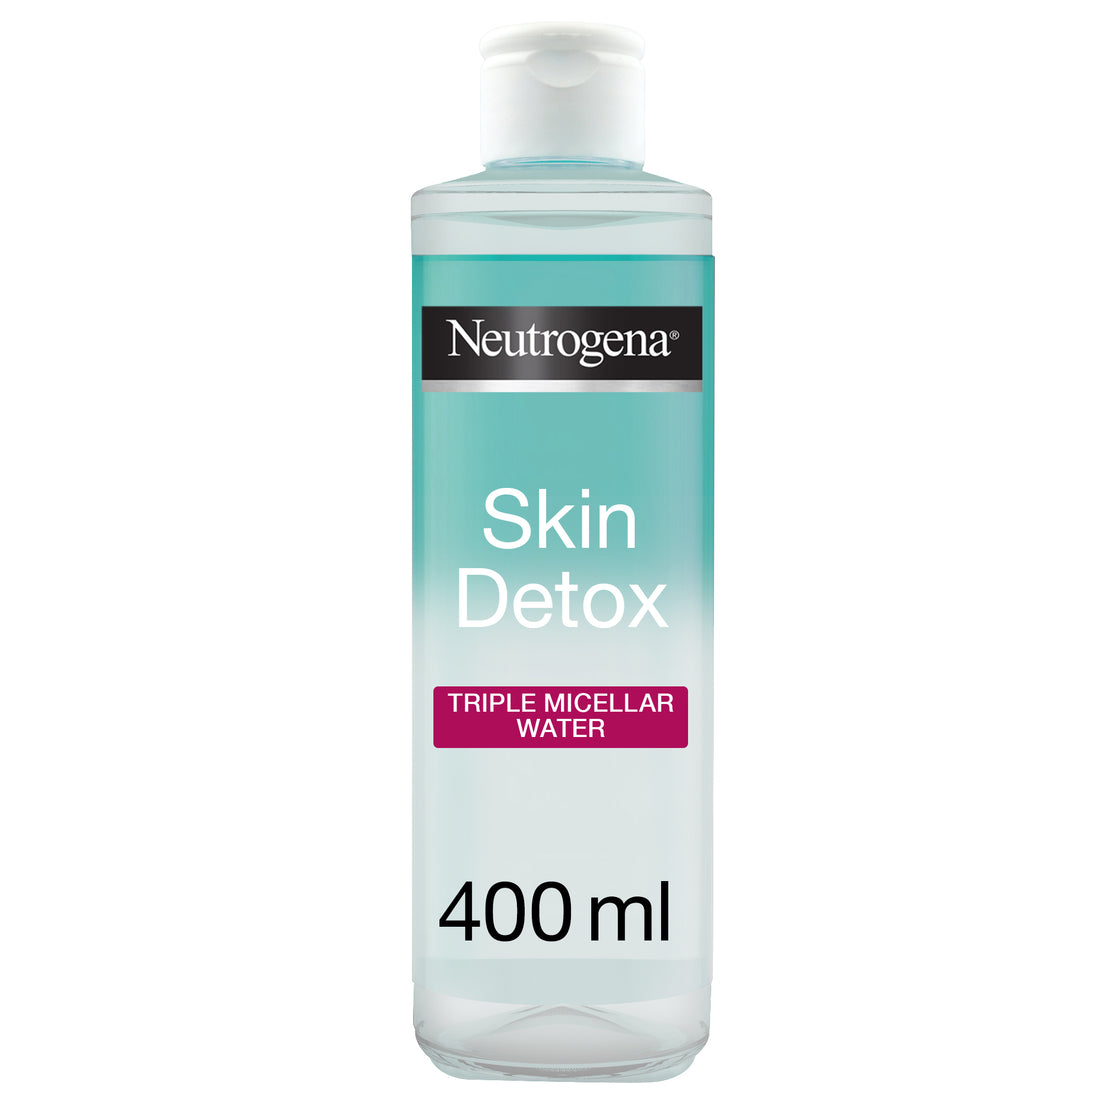 Neutrogena Triple Micellar Water, Skin Detox, 400ml